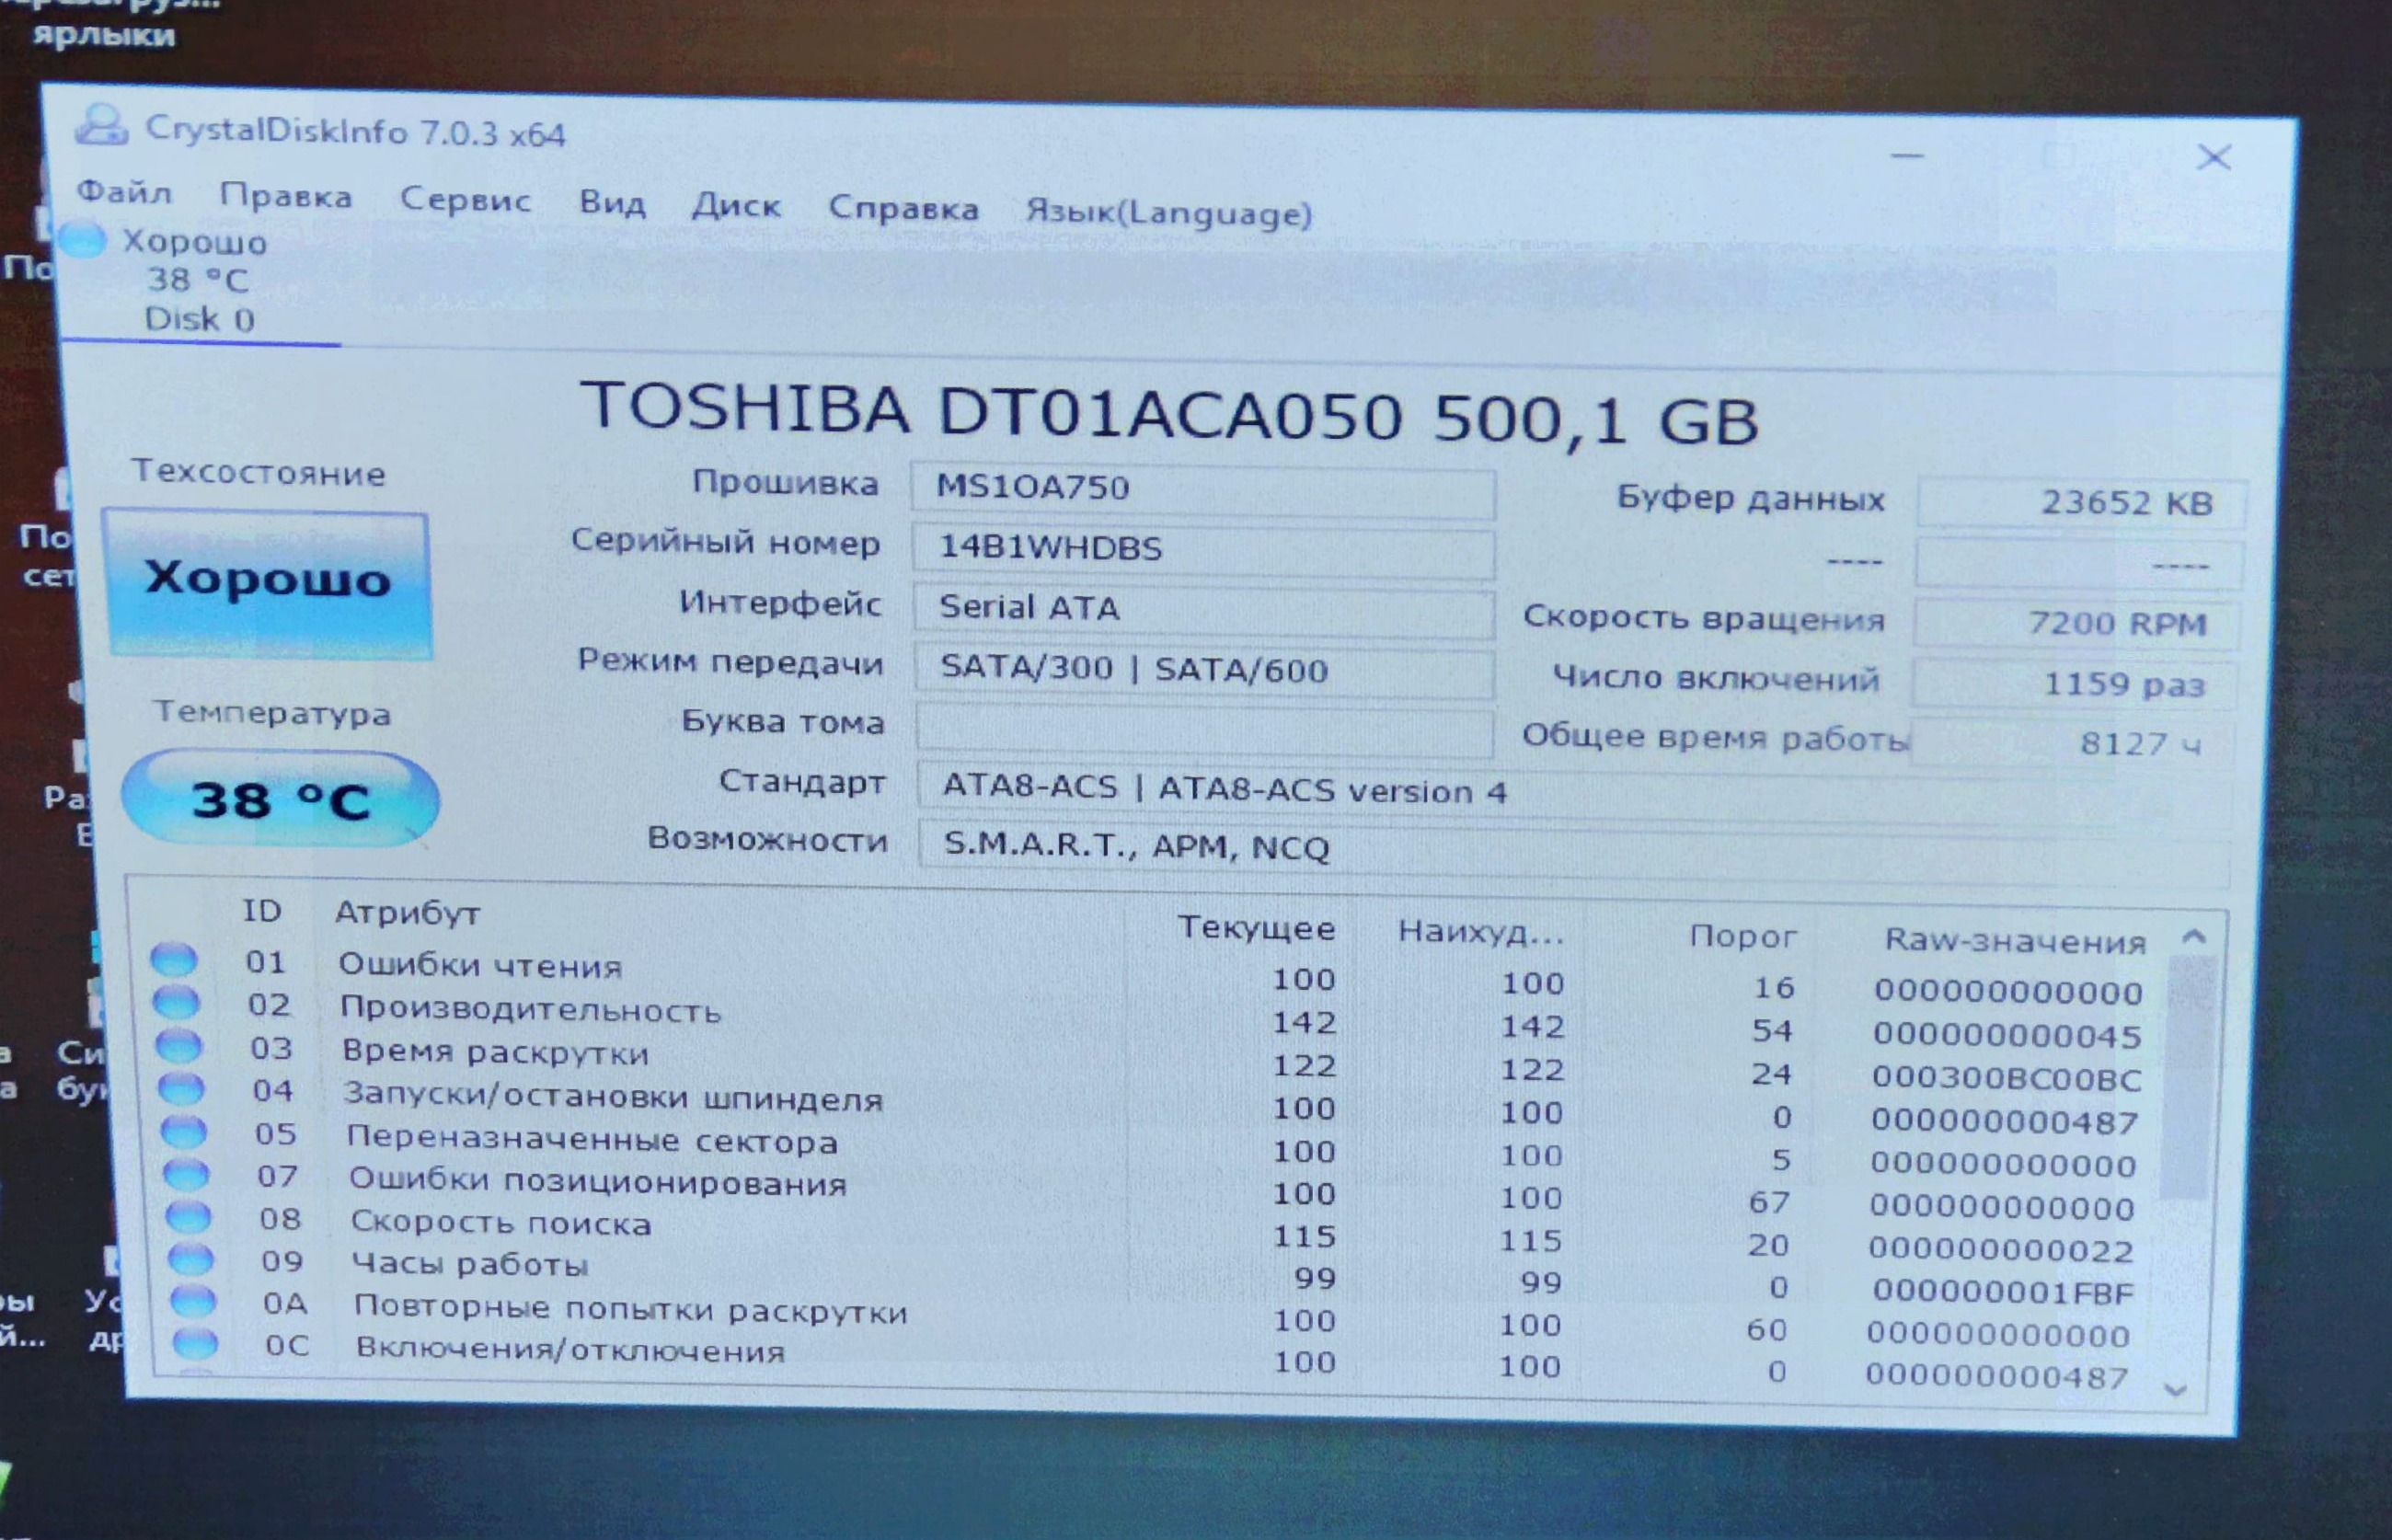 3.5” Toshiba dt01aca050 500 gb sata 600 7200 rpm